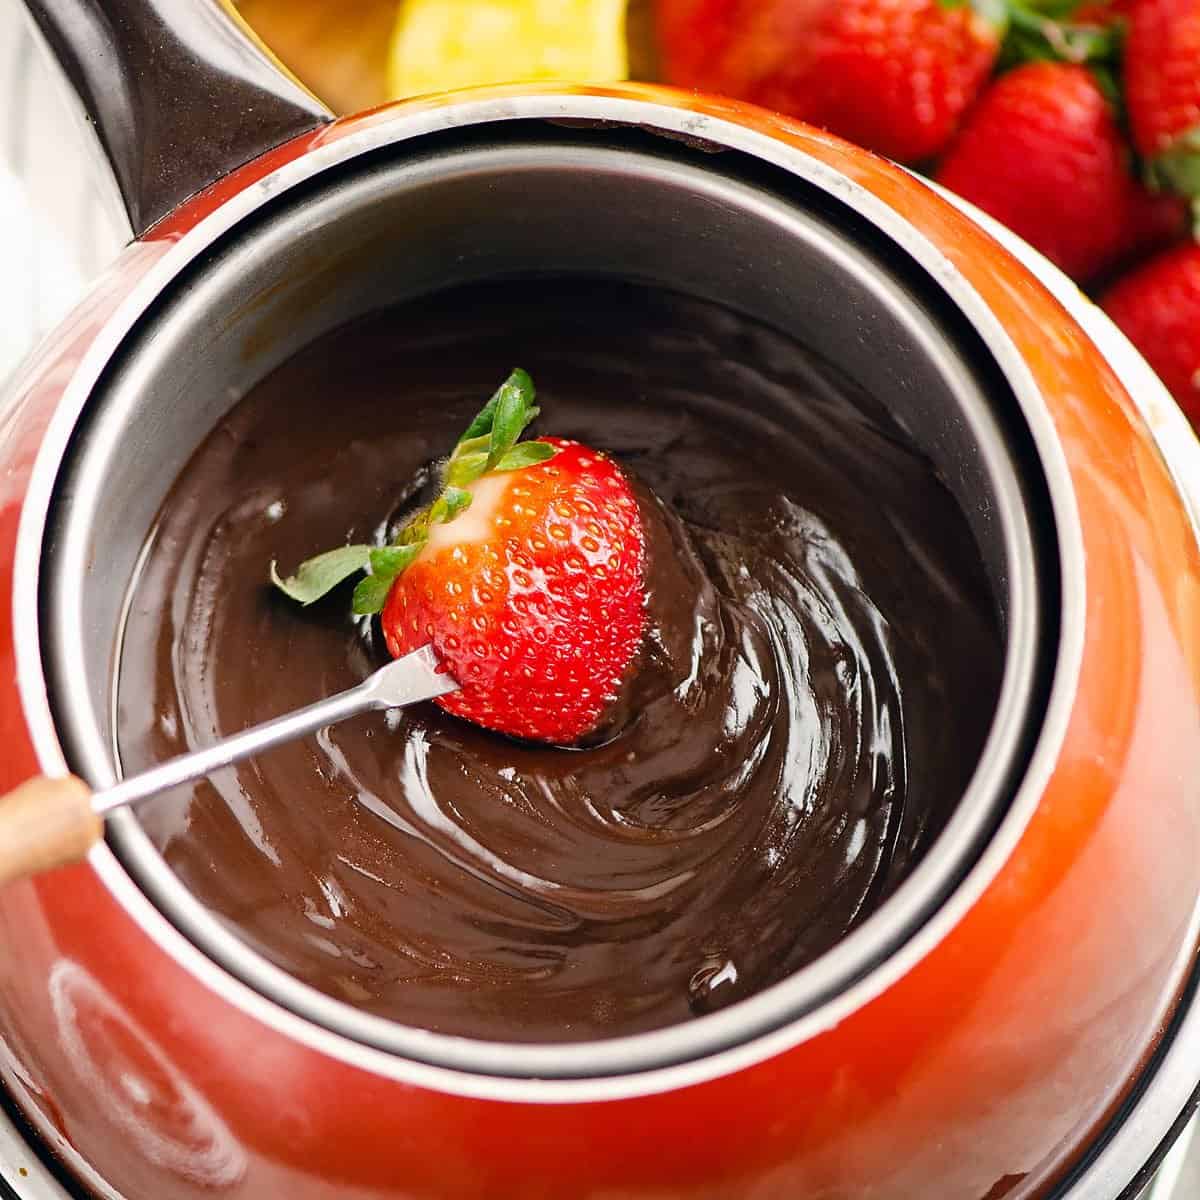 Chocolate Fondue Recipe: Easy Chocolate Fondue at Home